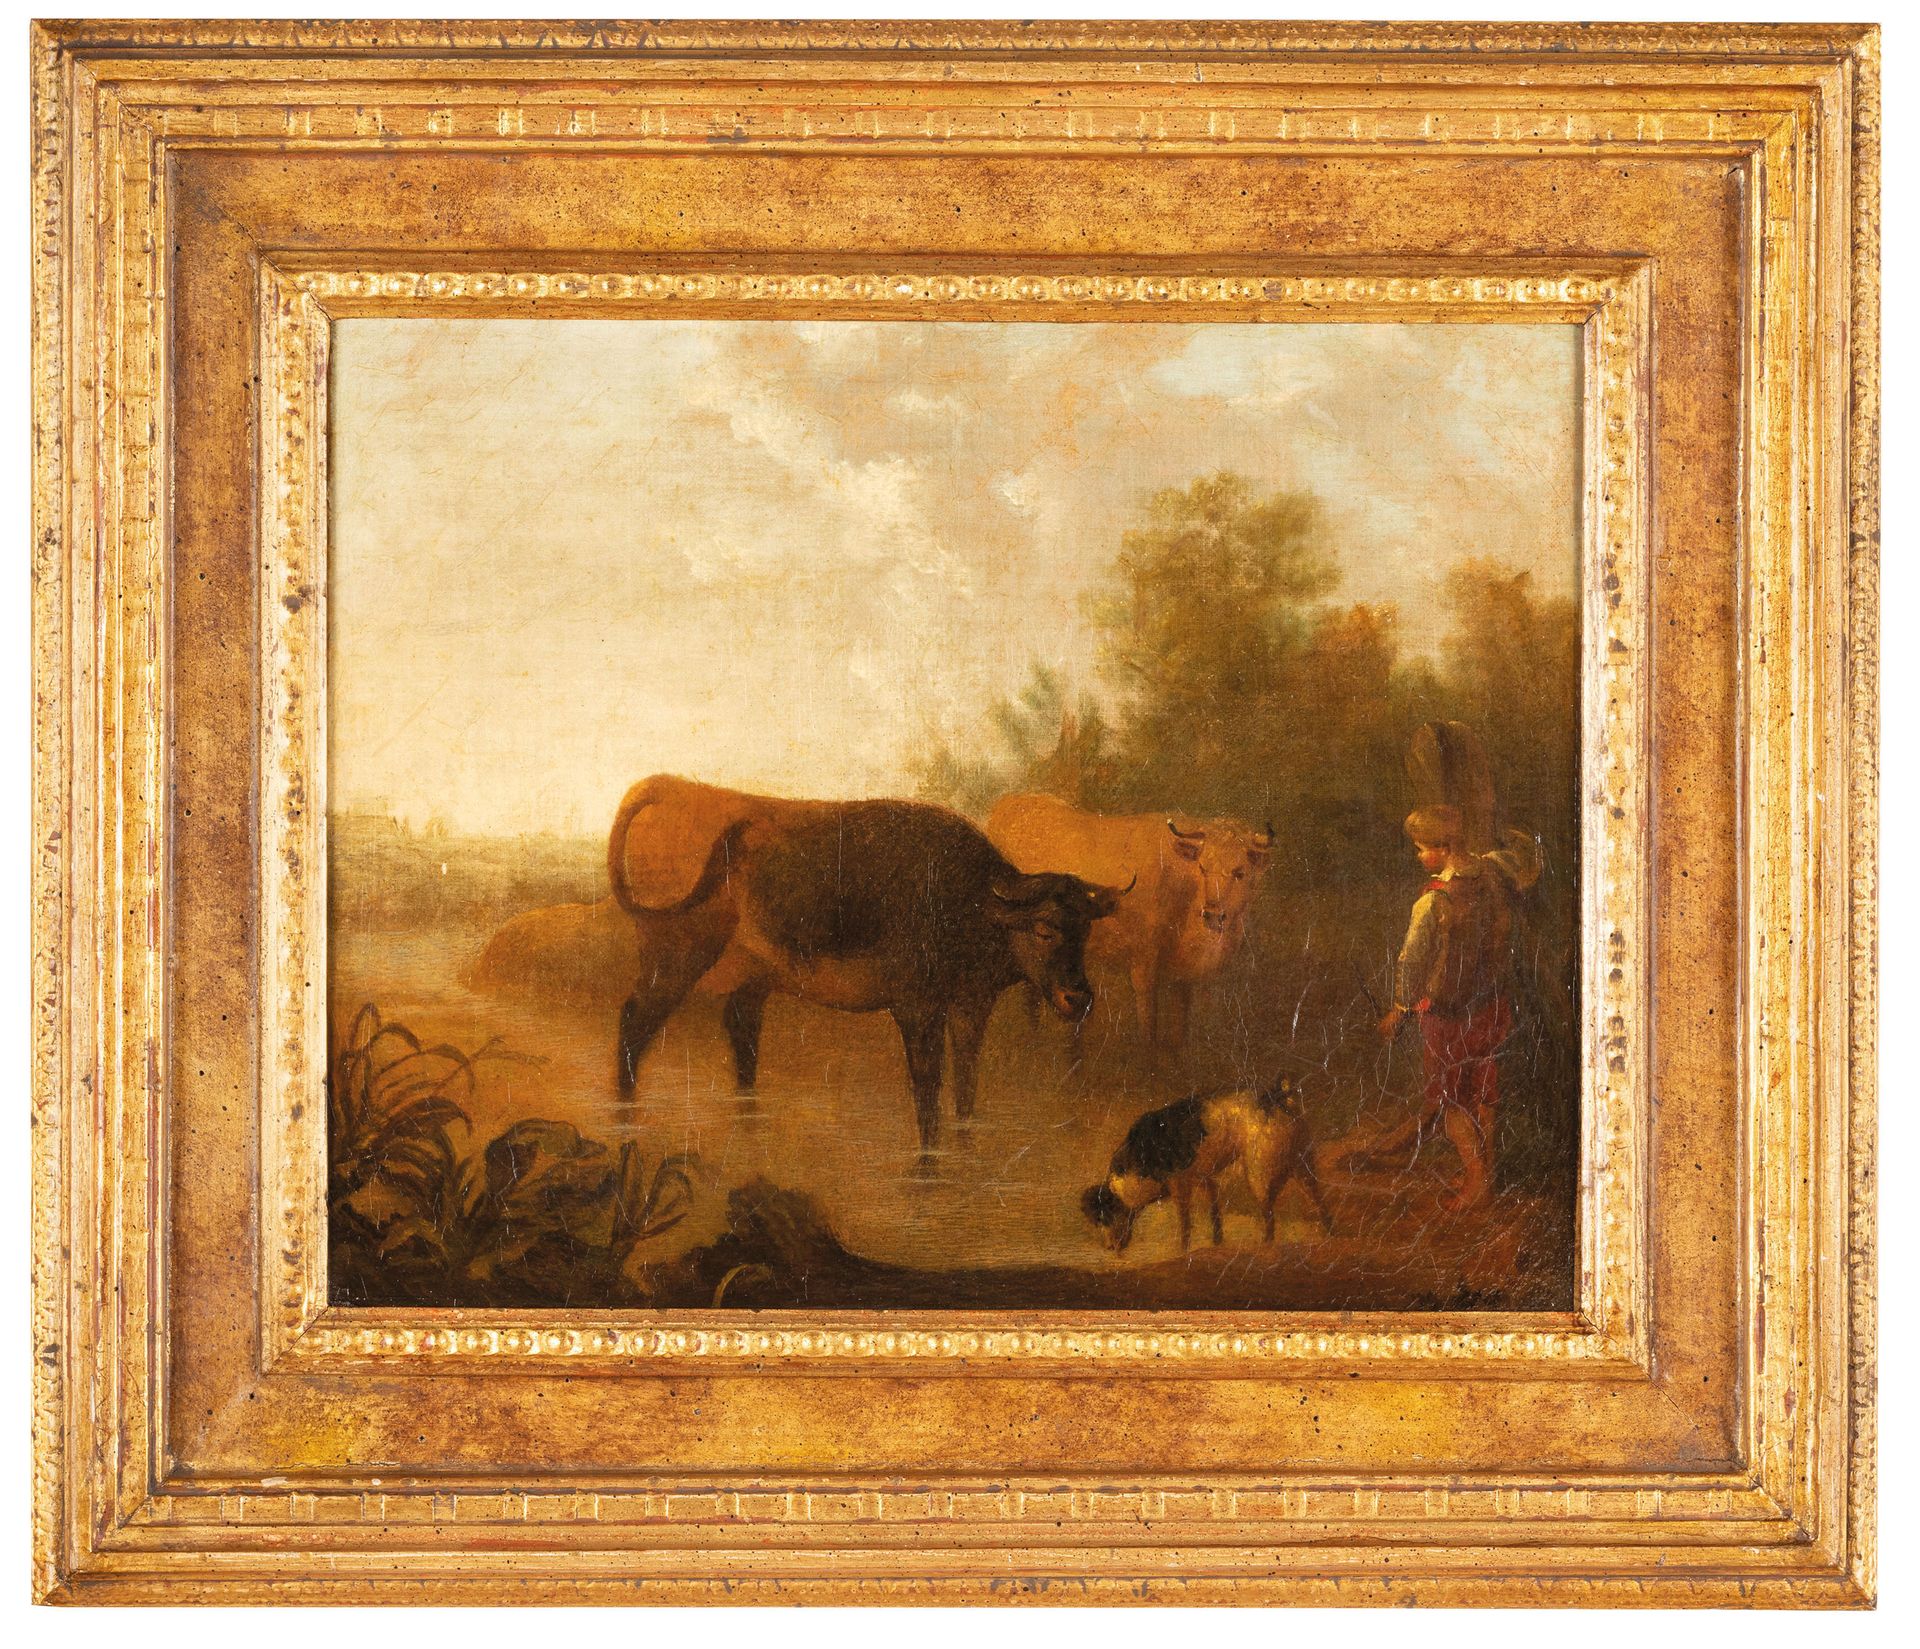 PITTORE DEL XVIII SECOLO Pastorale Szene
Öl auf Leinwand, cm 30X38